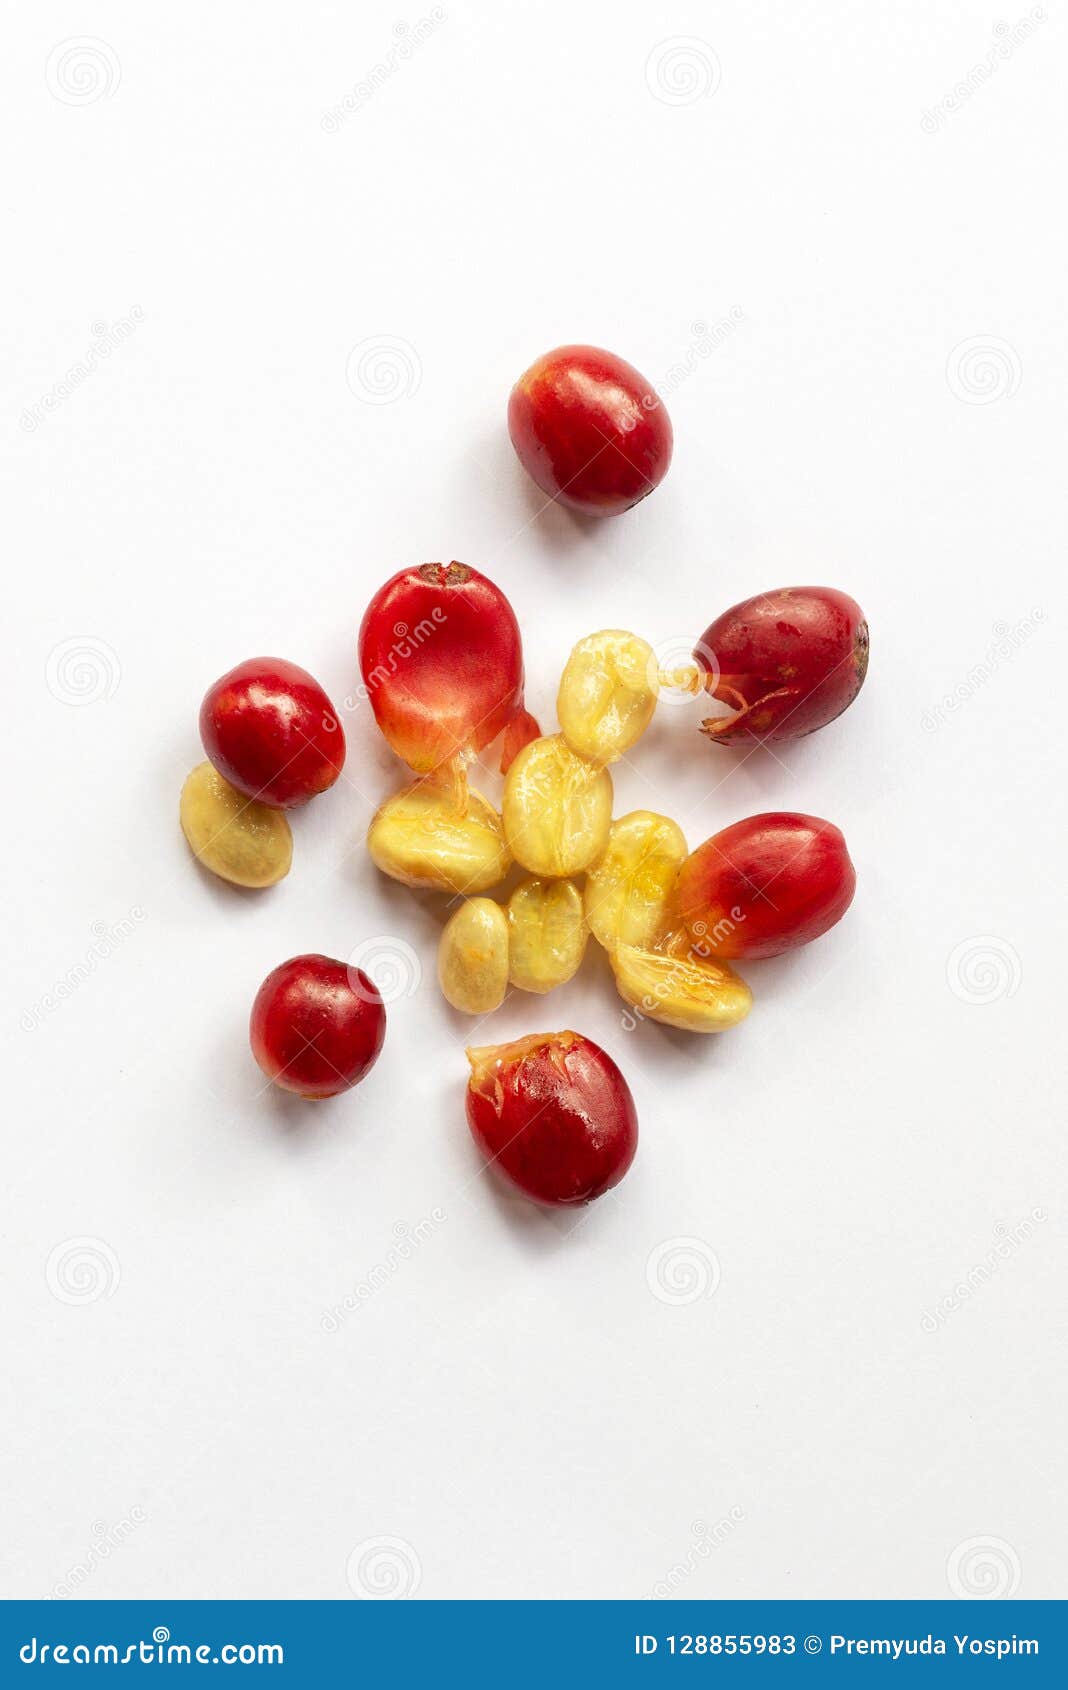 fresh skin of coffee cherries for made cascara tea eco-friendly